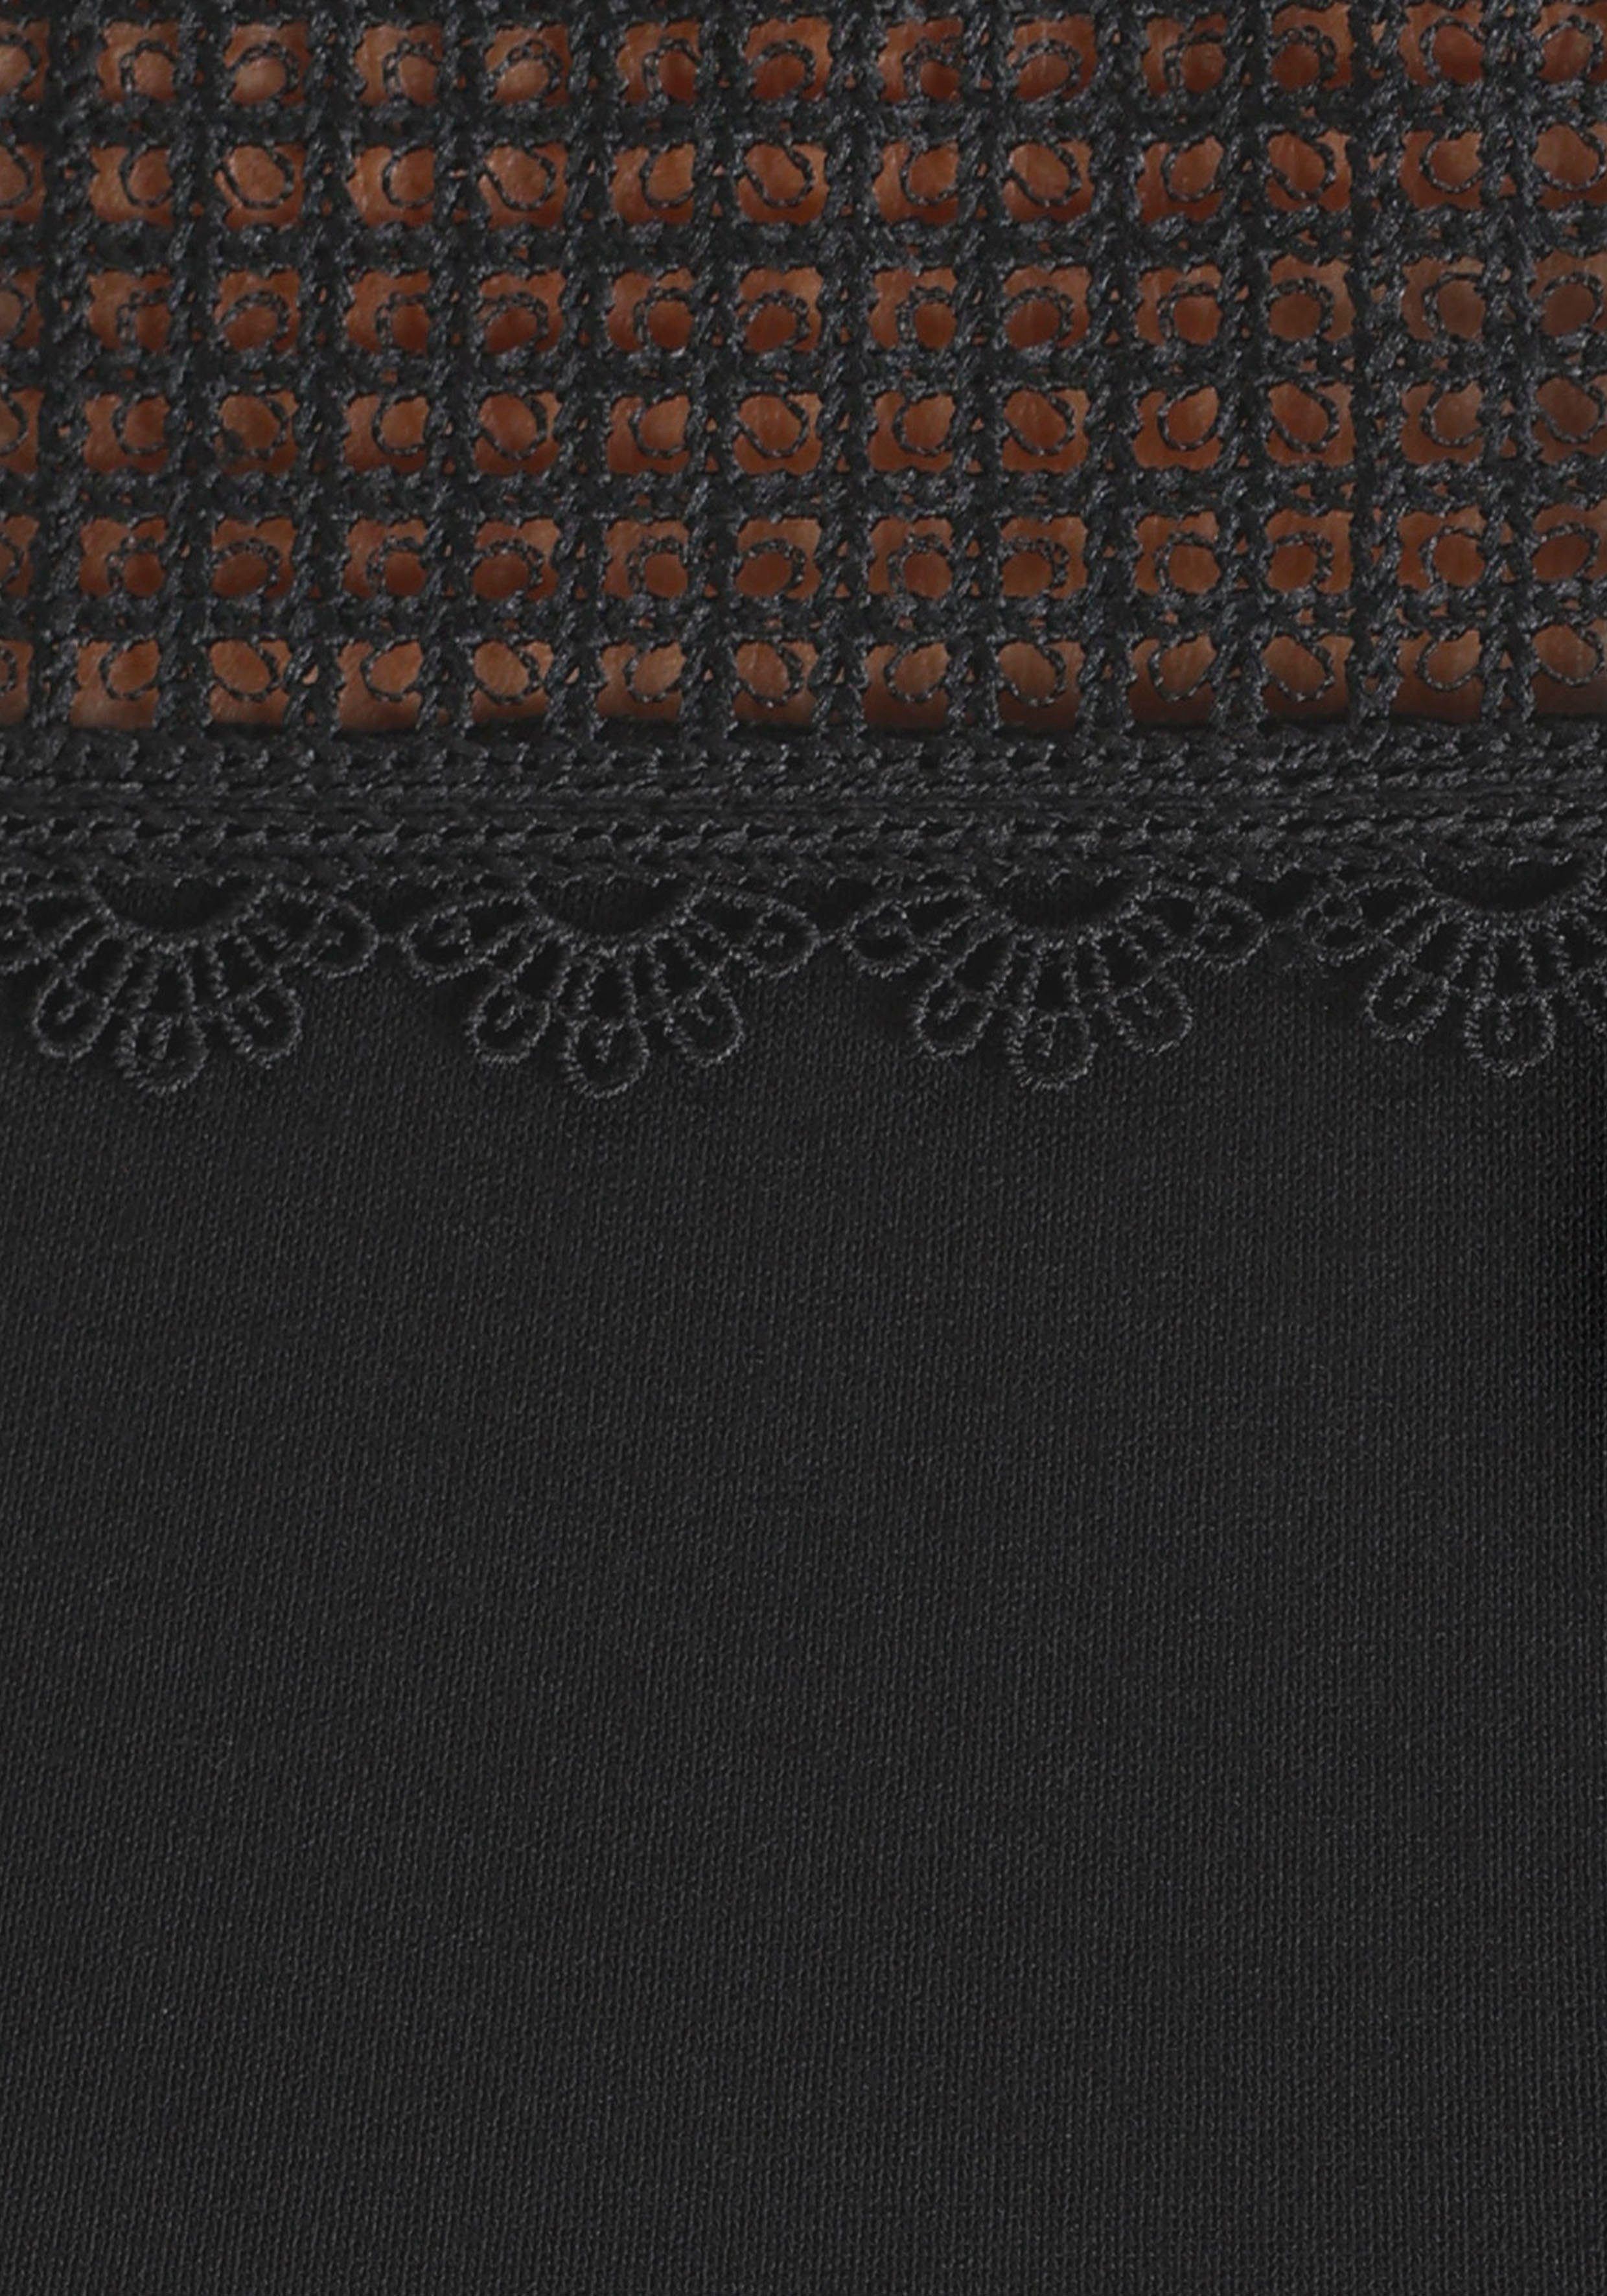 Netzshirt mit Melrose Crochet-Einsatz